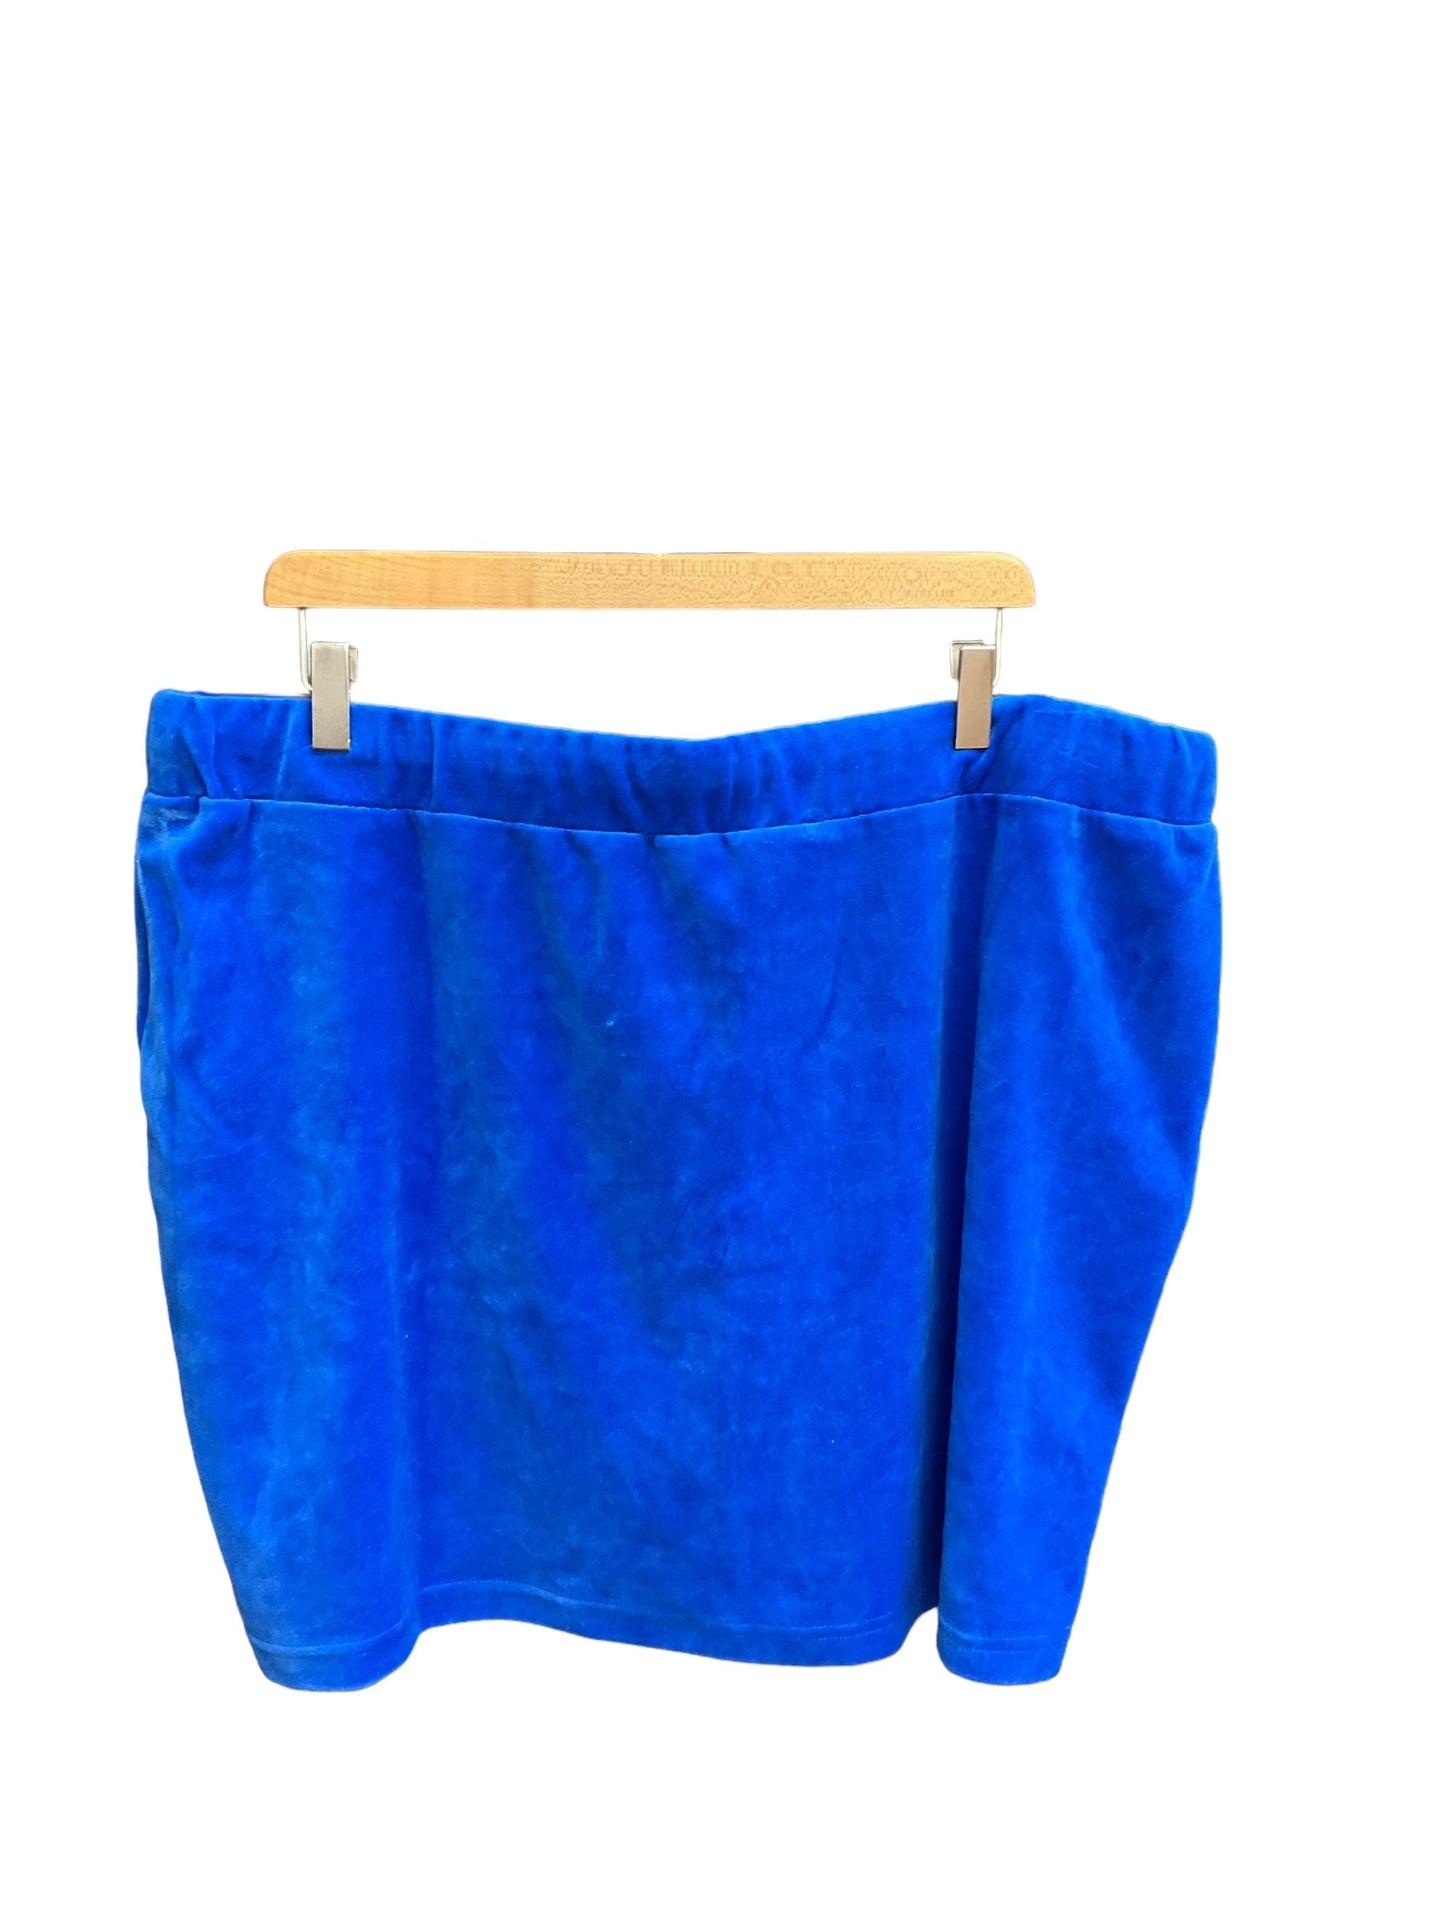 Blue Skirt Mini & Short Juicy Couture, Size 18